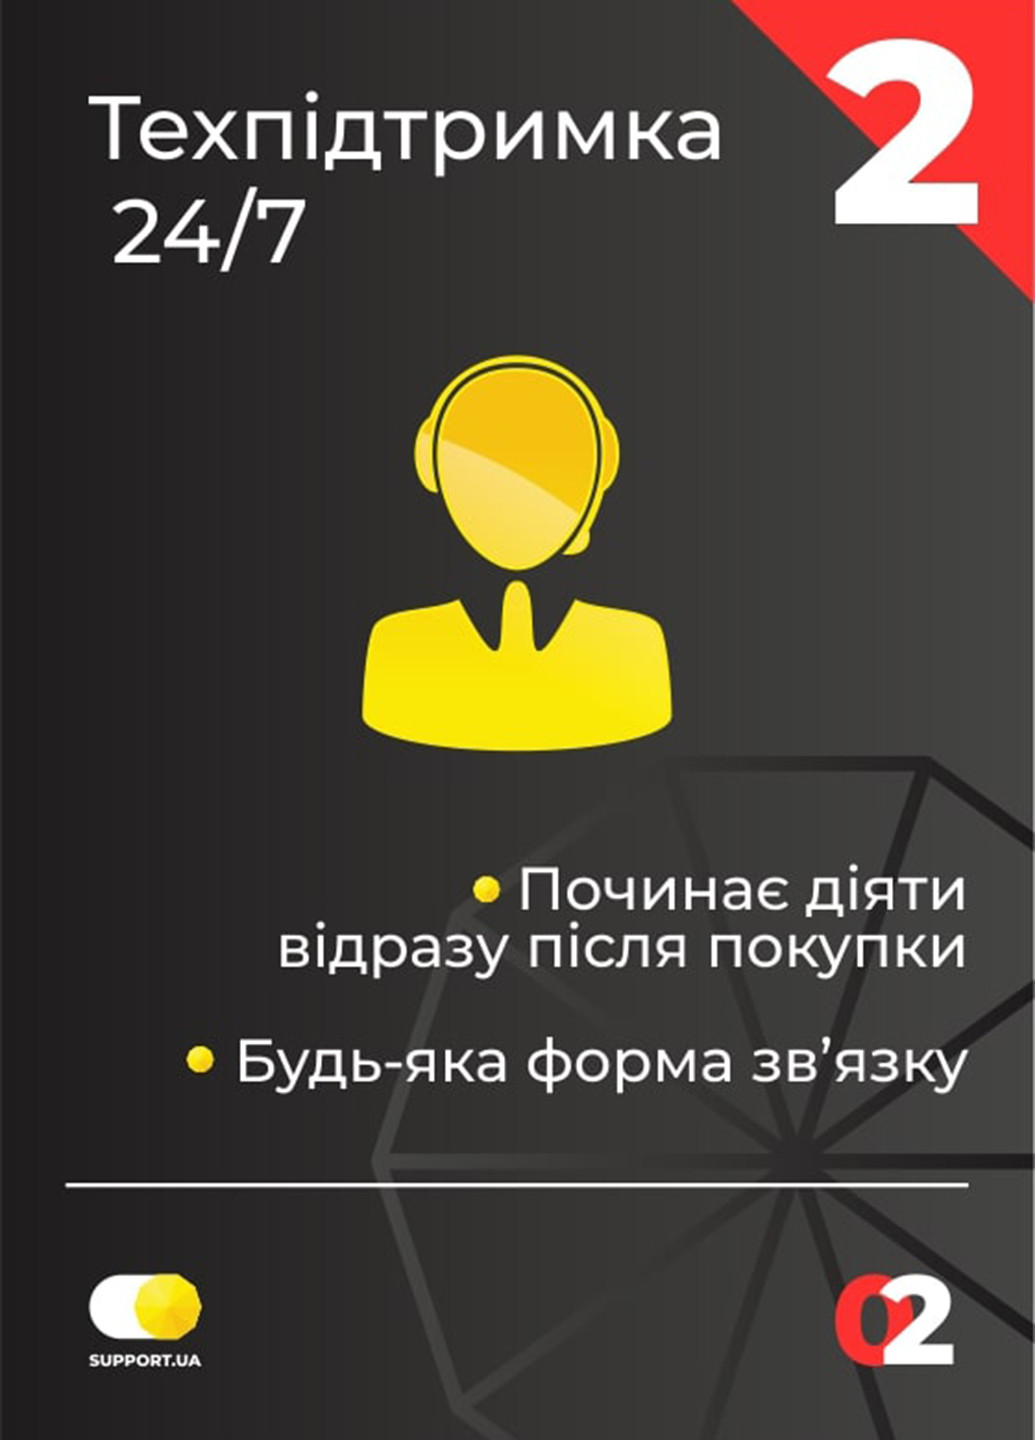 +1 год гарантии (1001-2000), Электронный сертификат от Support.ua